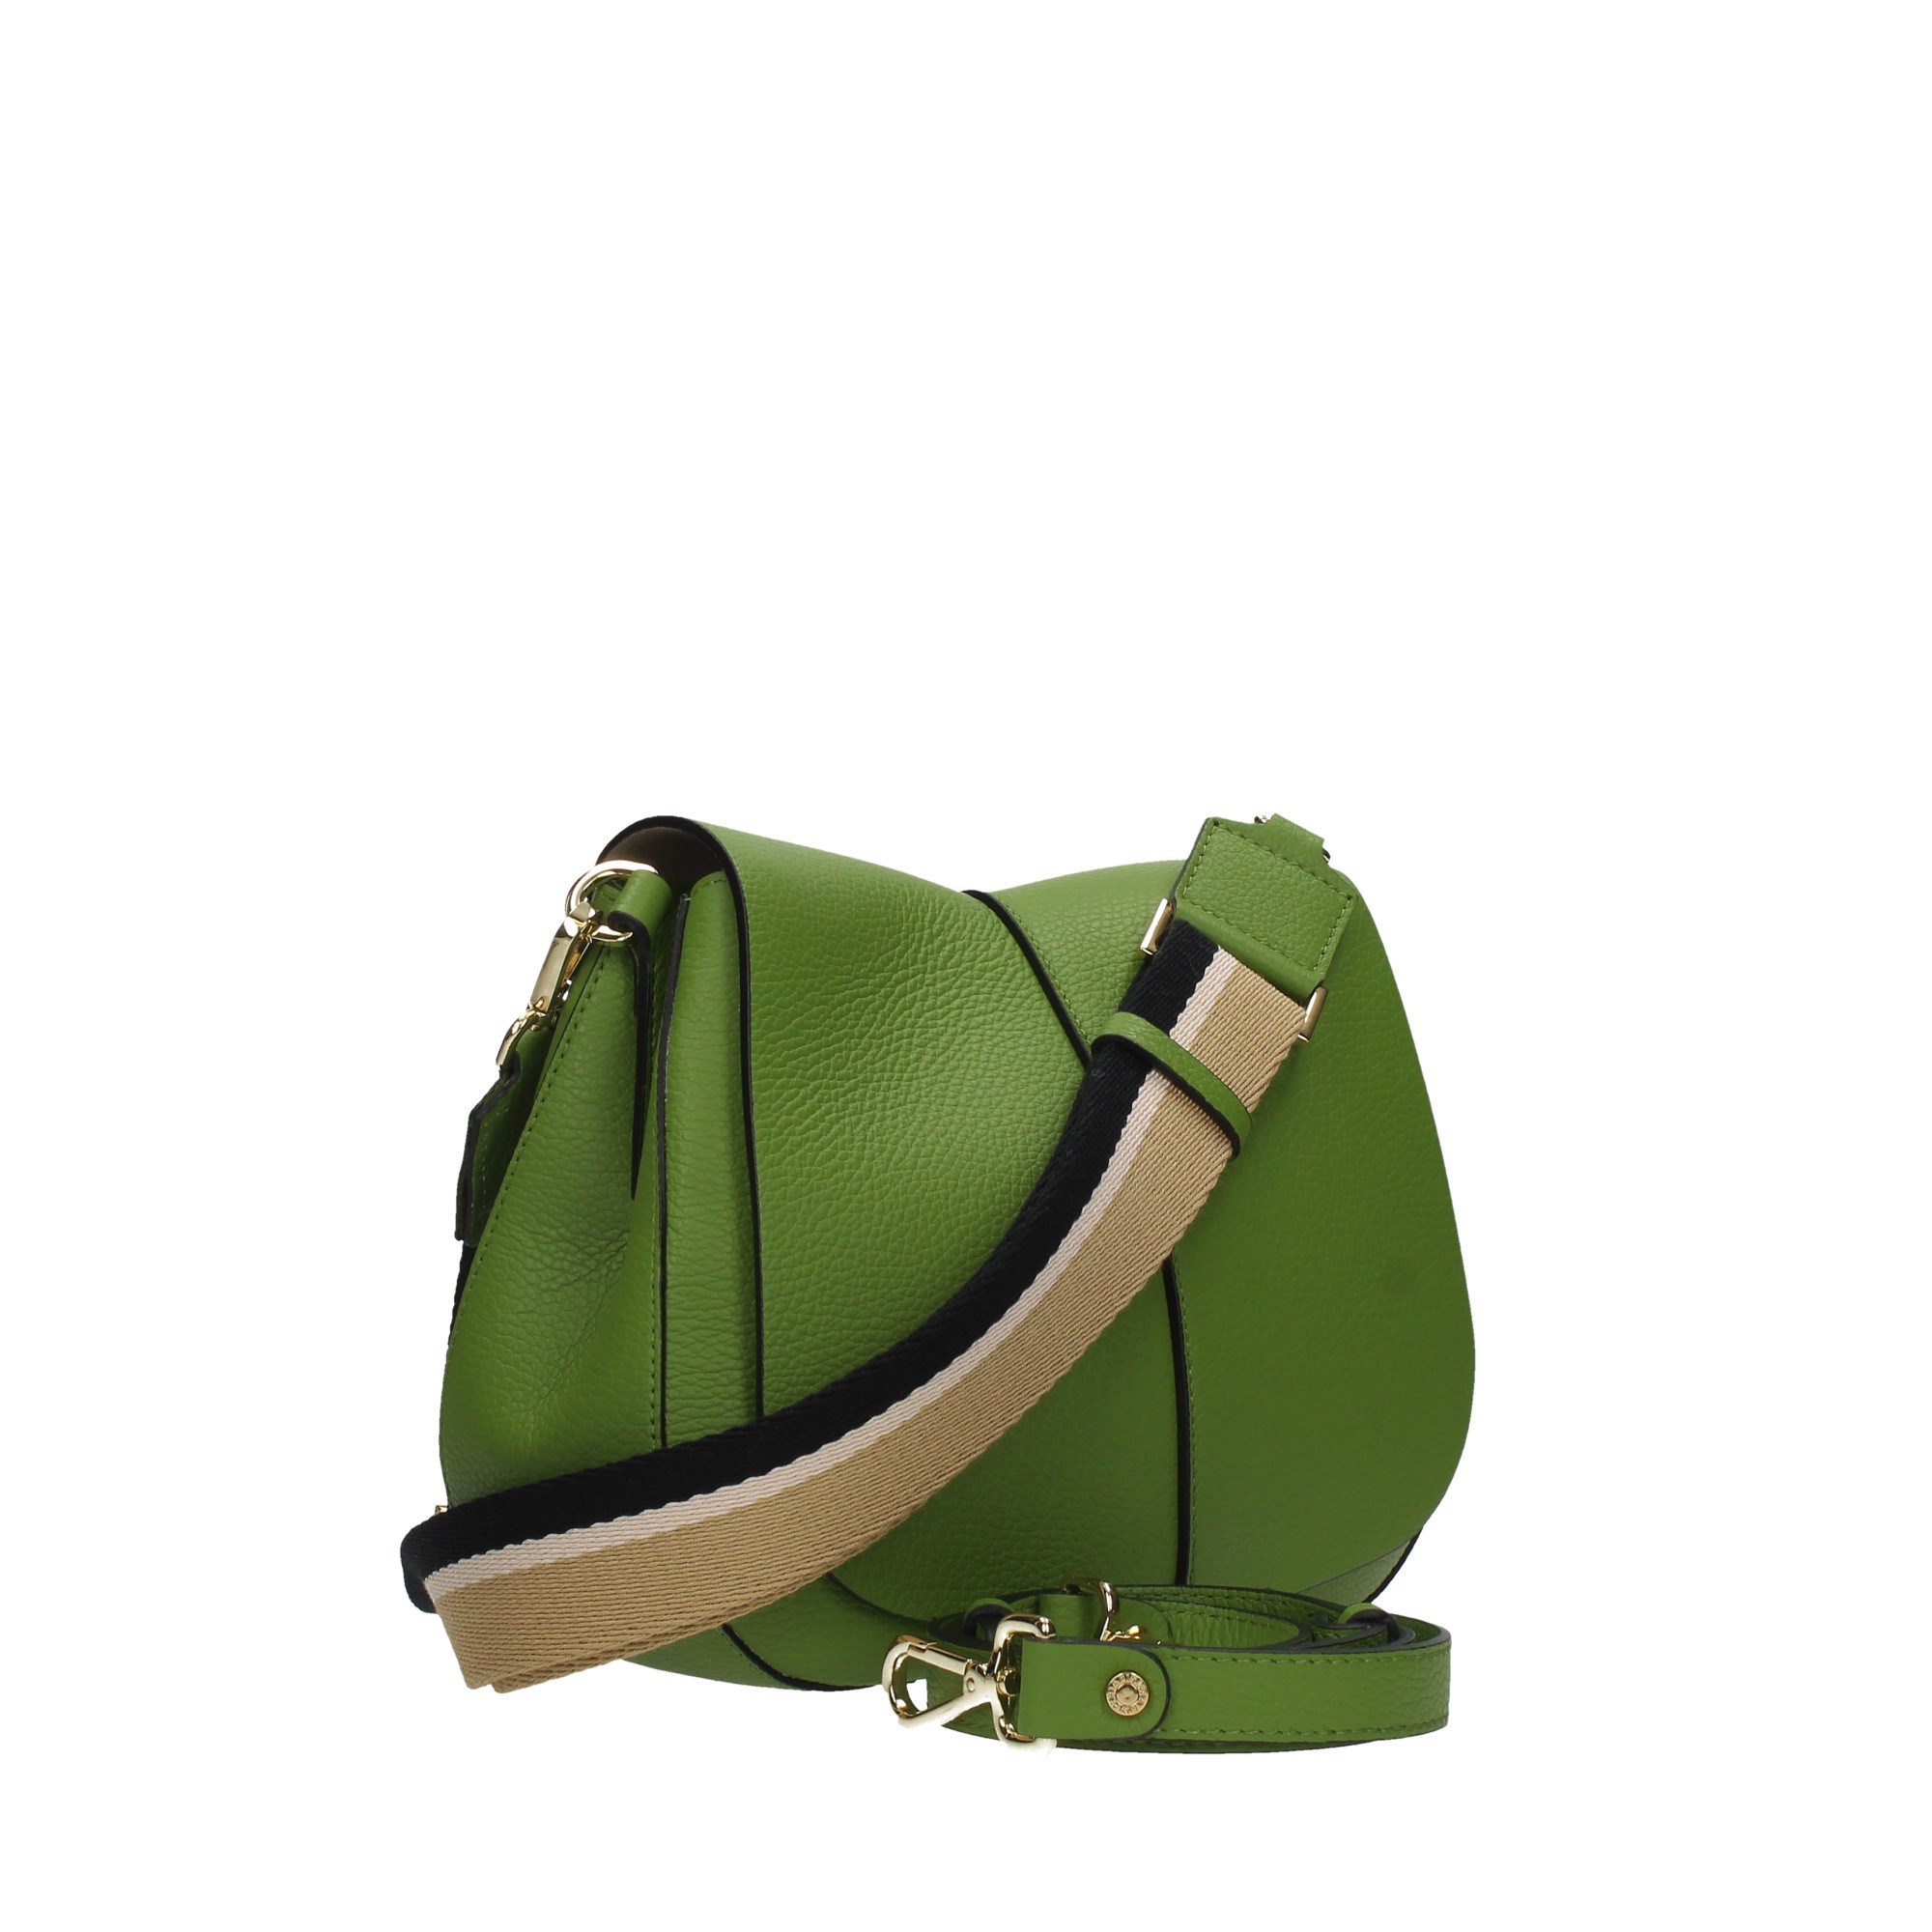 Gianni Chiarini Accessories Women Shoulder Bags BS6036/23PE GRN-NA